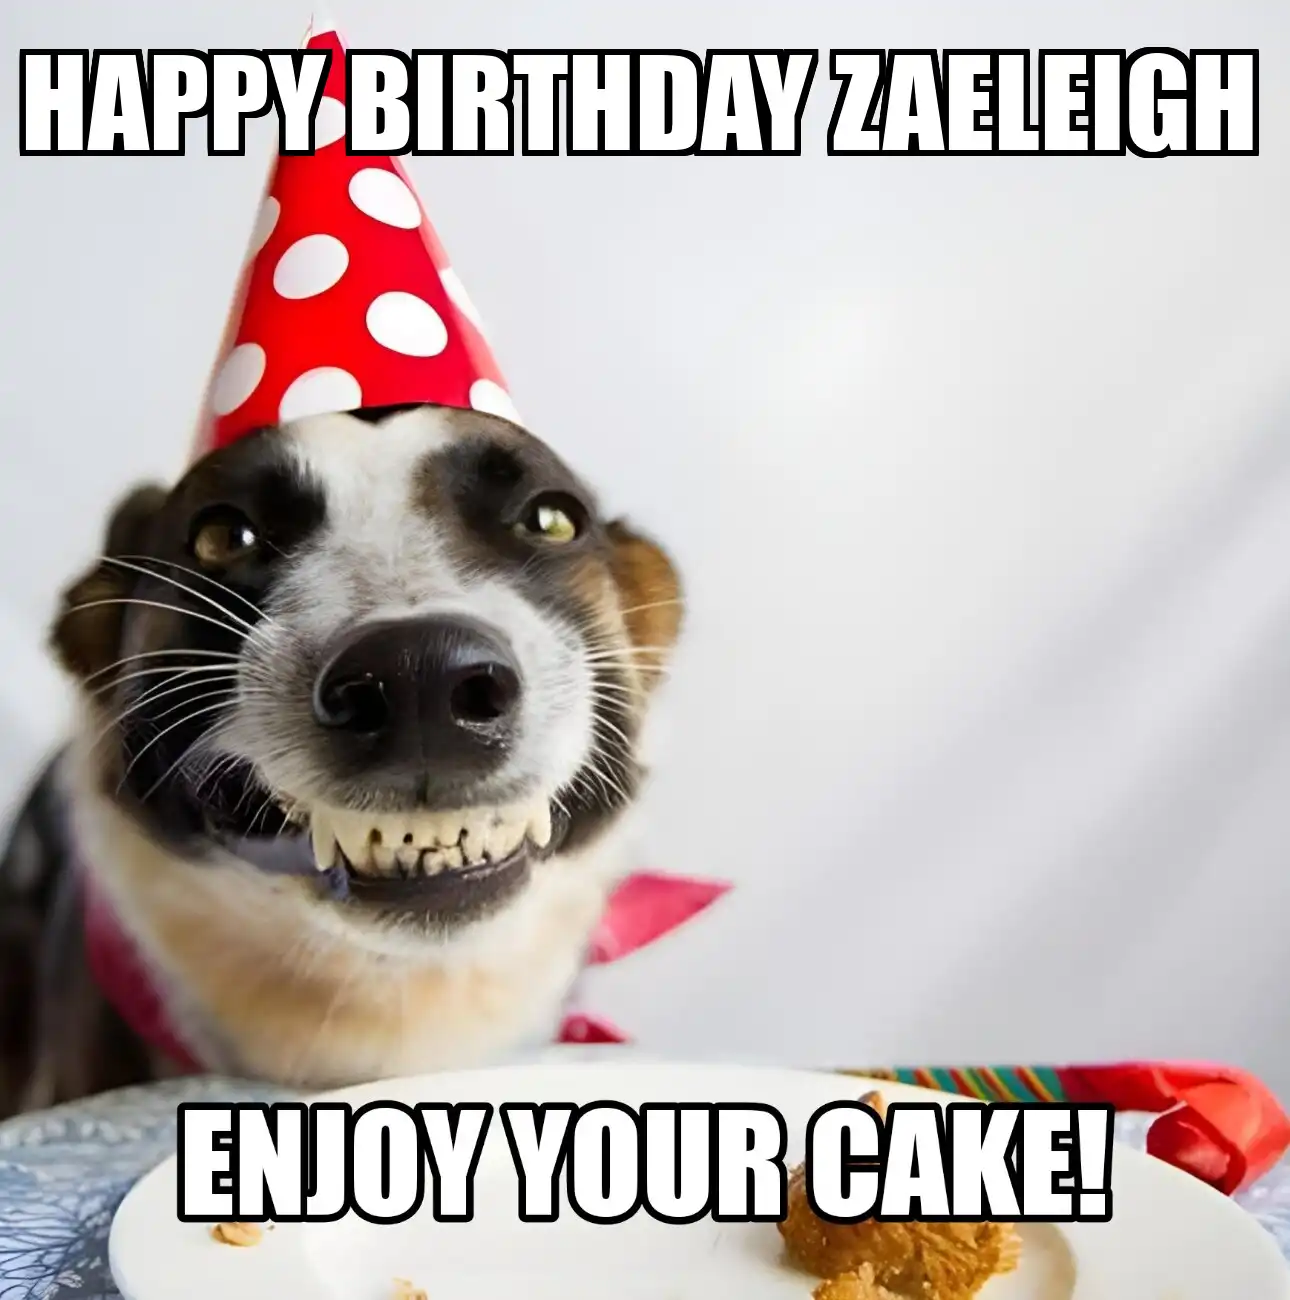 Happy Birthday Zaeleigh Enjoy Your Cake Dog Meme